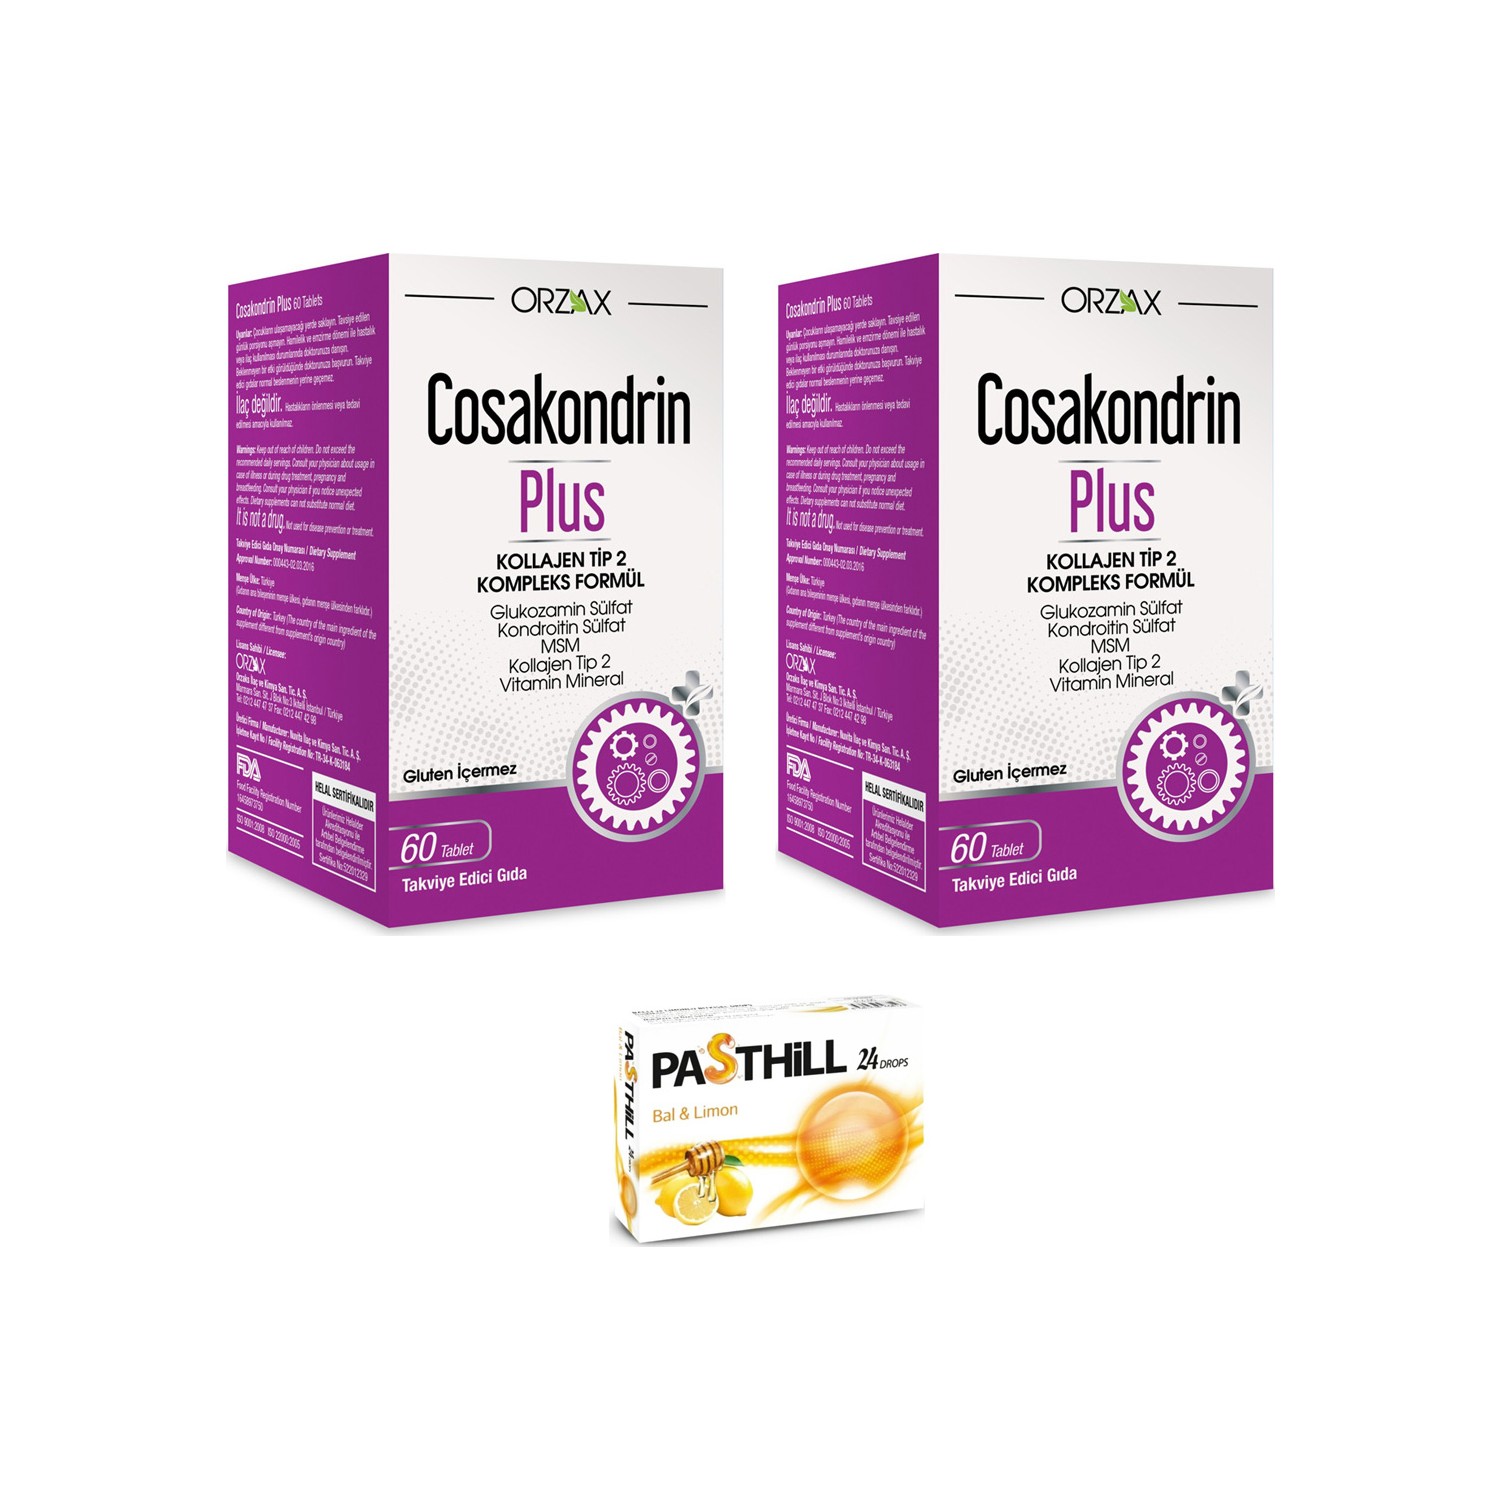 Пищевая добавка Orzax Cosakondrin Plus, 2 упаковки по 60 таблеток + Пастилки Pasthill со вкусом меда и лимона, 2 упаковки